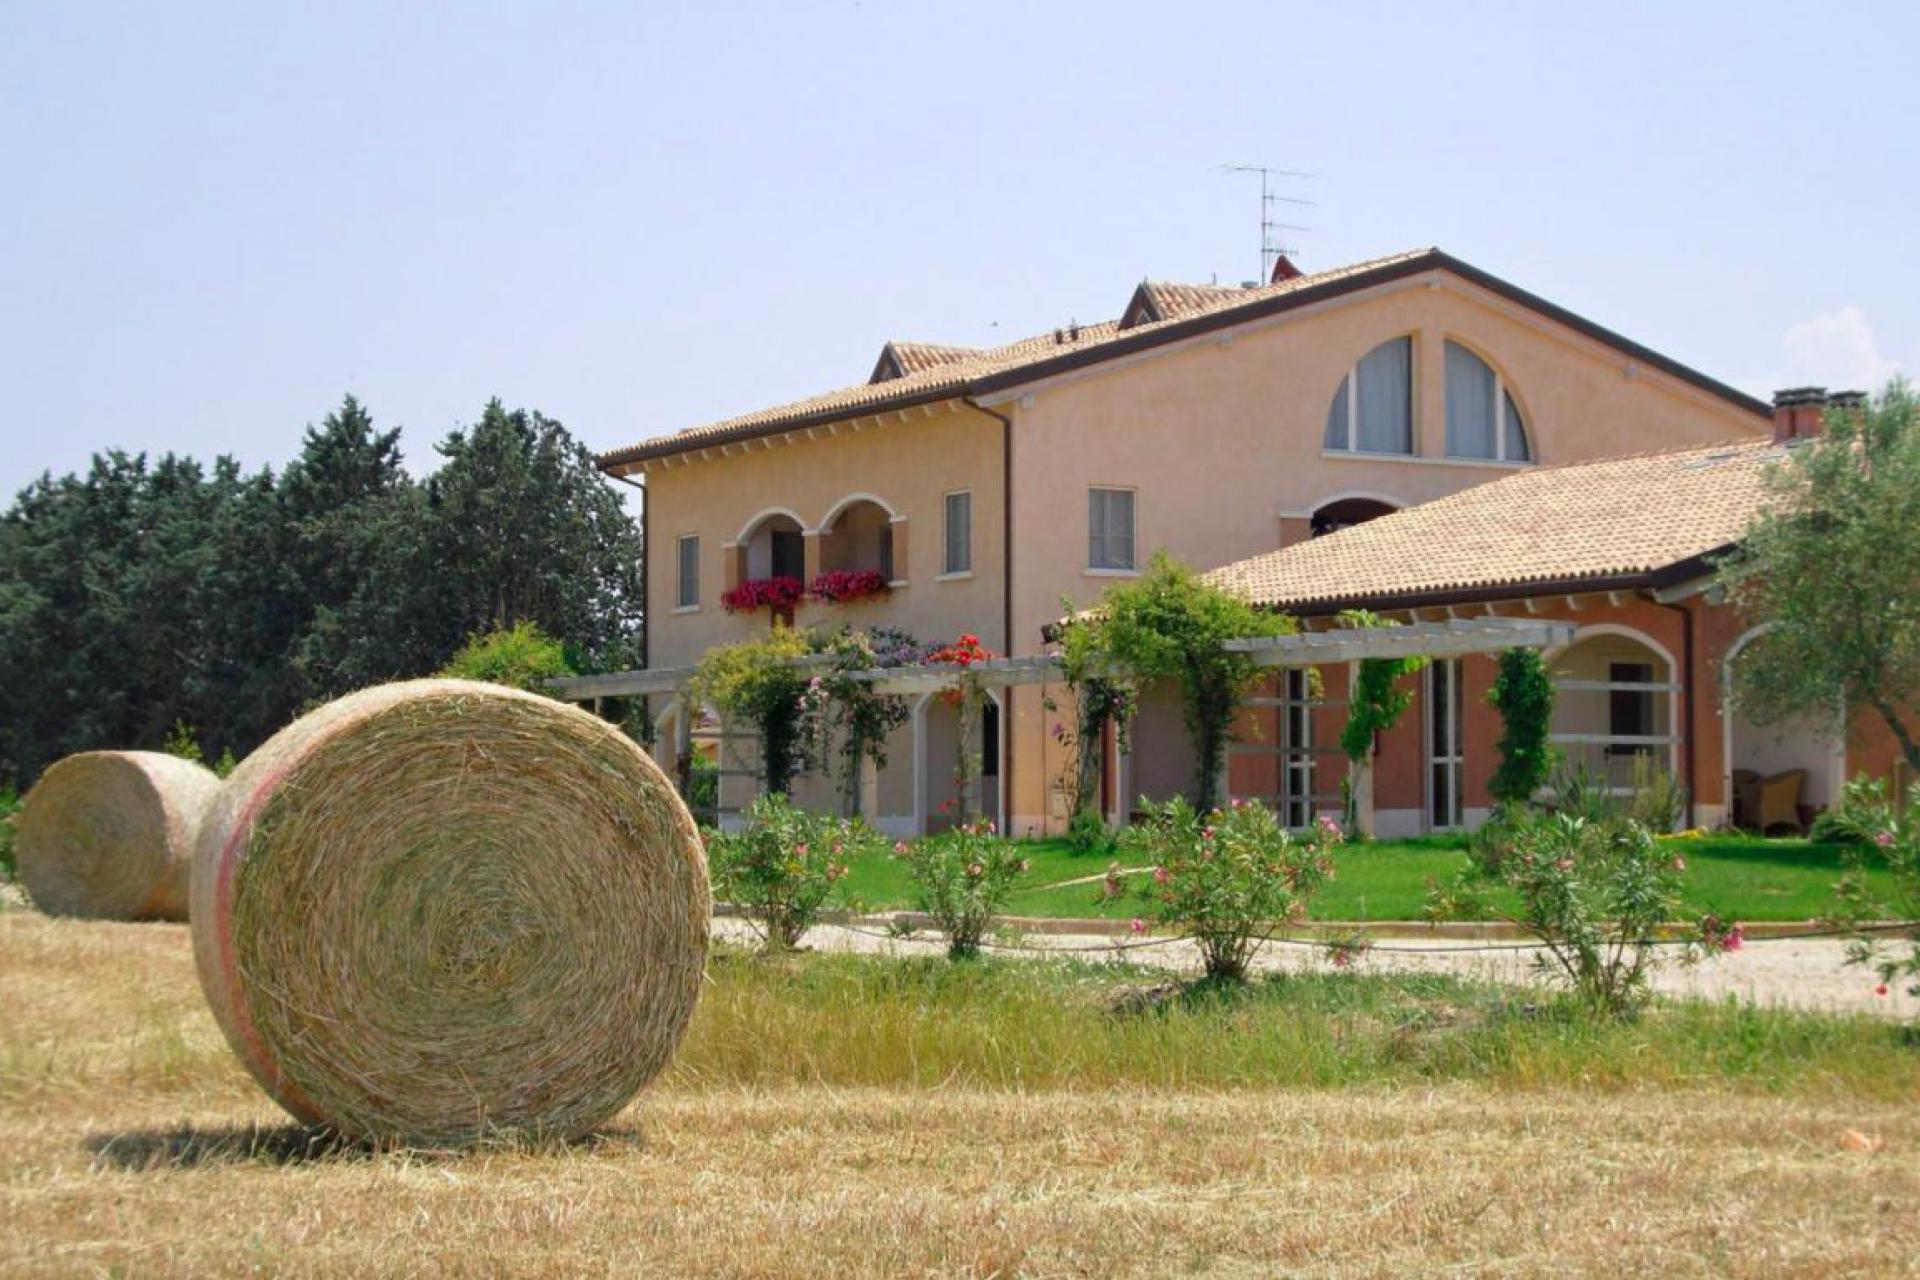 Agriturismo Toscana Agriturismo di lusso in Toscana, vicino alla spiaggia